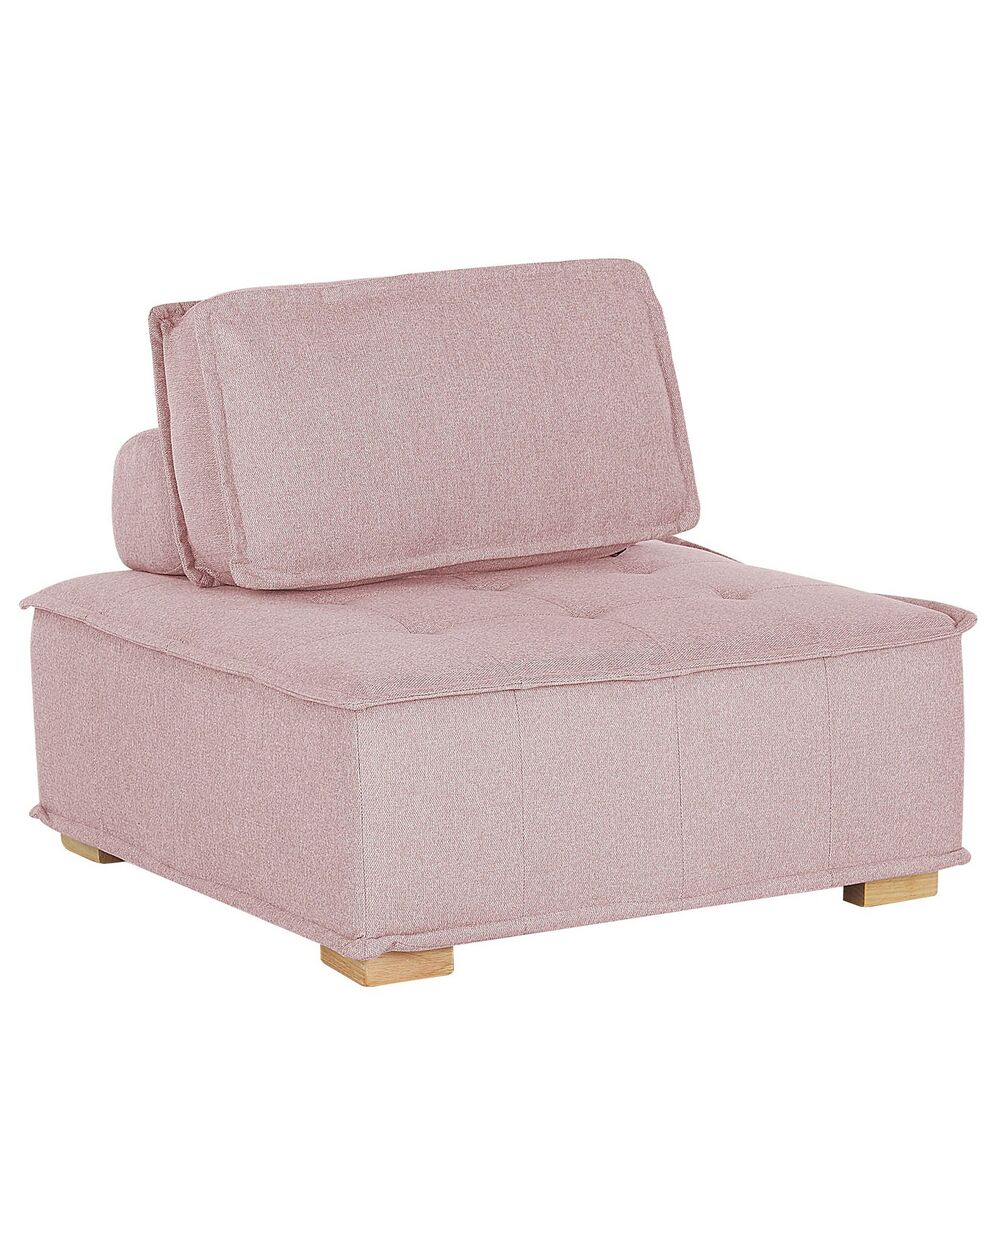 Seduta divano 1 posto in tessuto rosa TIBRO 